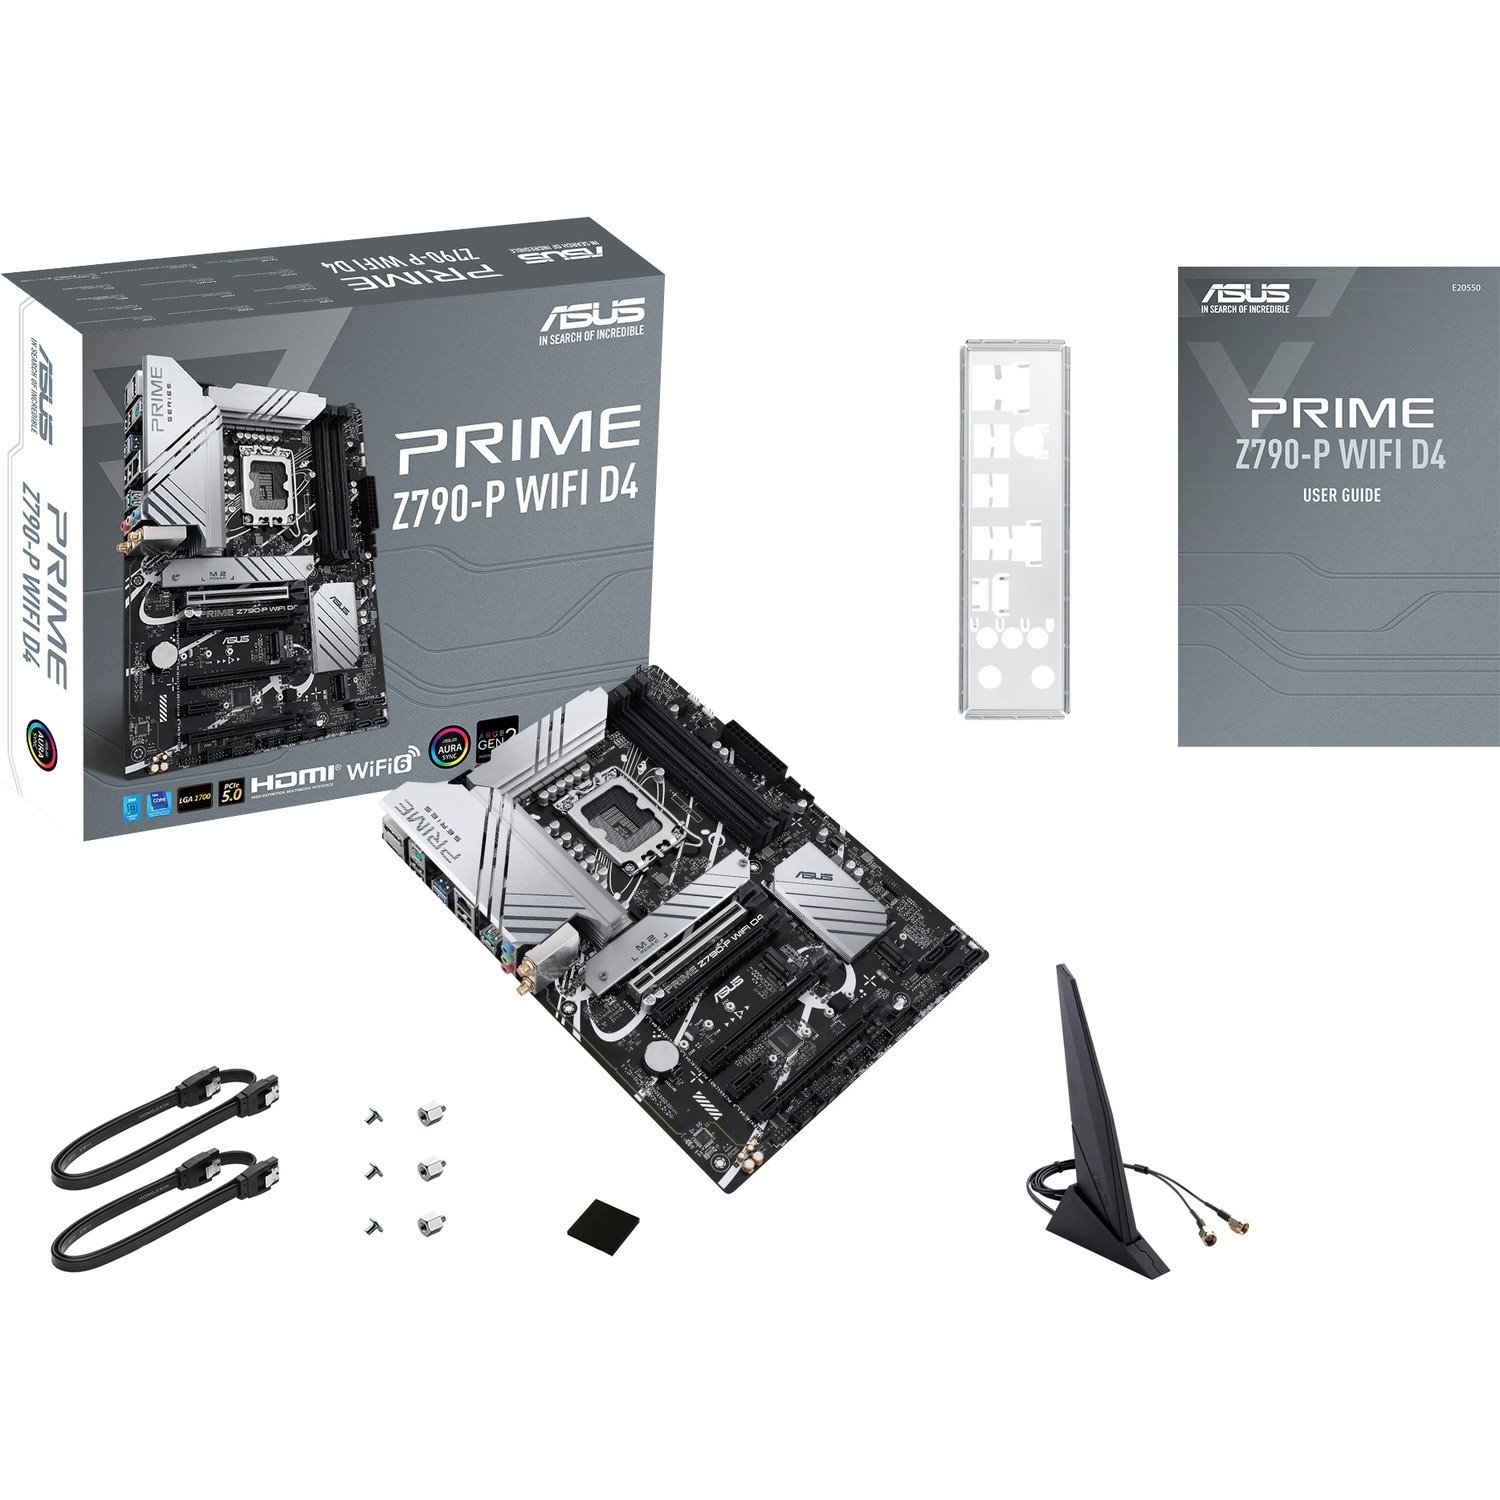 Asus Prime Z790-P WIFI D4 Gaming Desktop Motherboard - Intel Z790 Chipset - Socket LGA-1700 - ATX